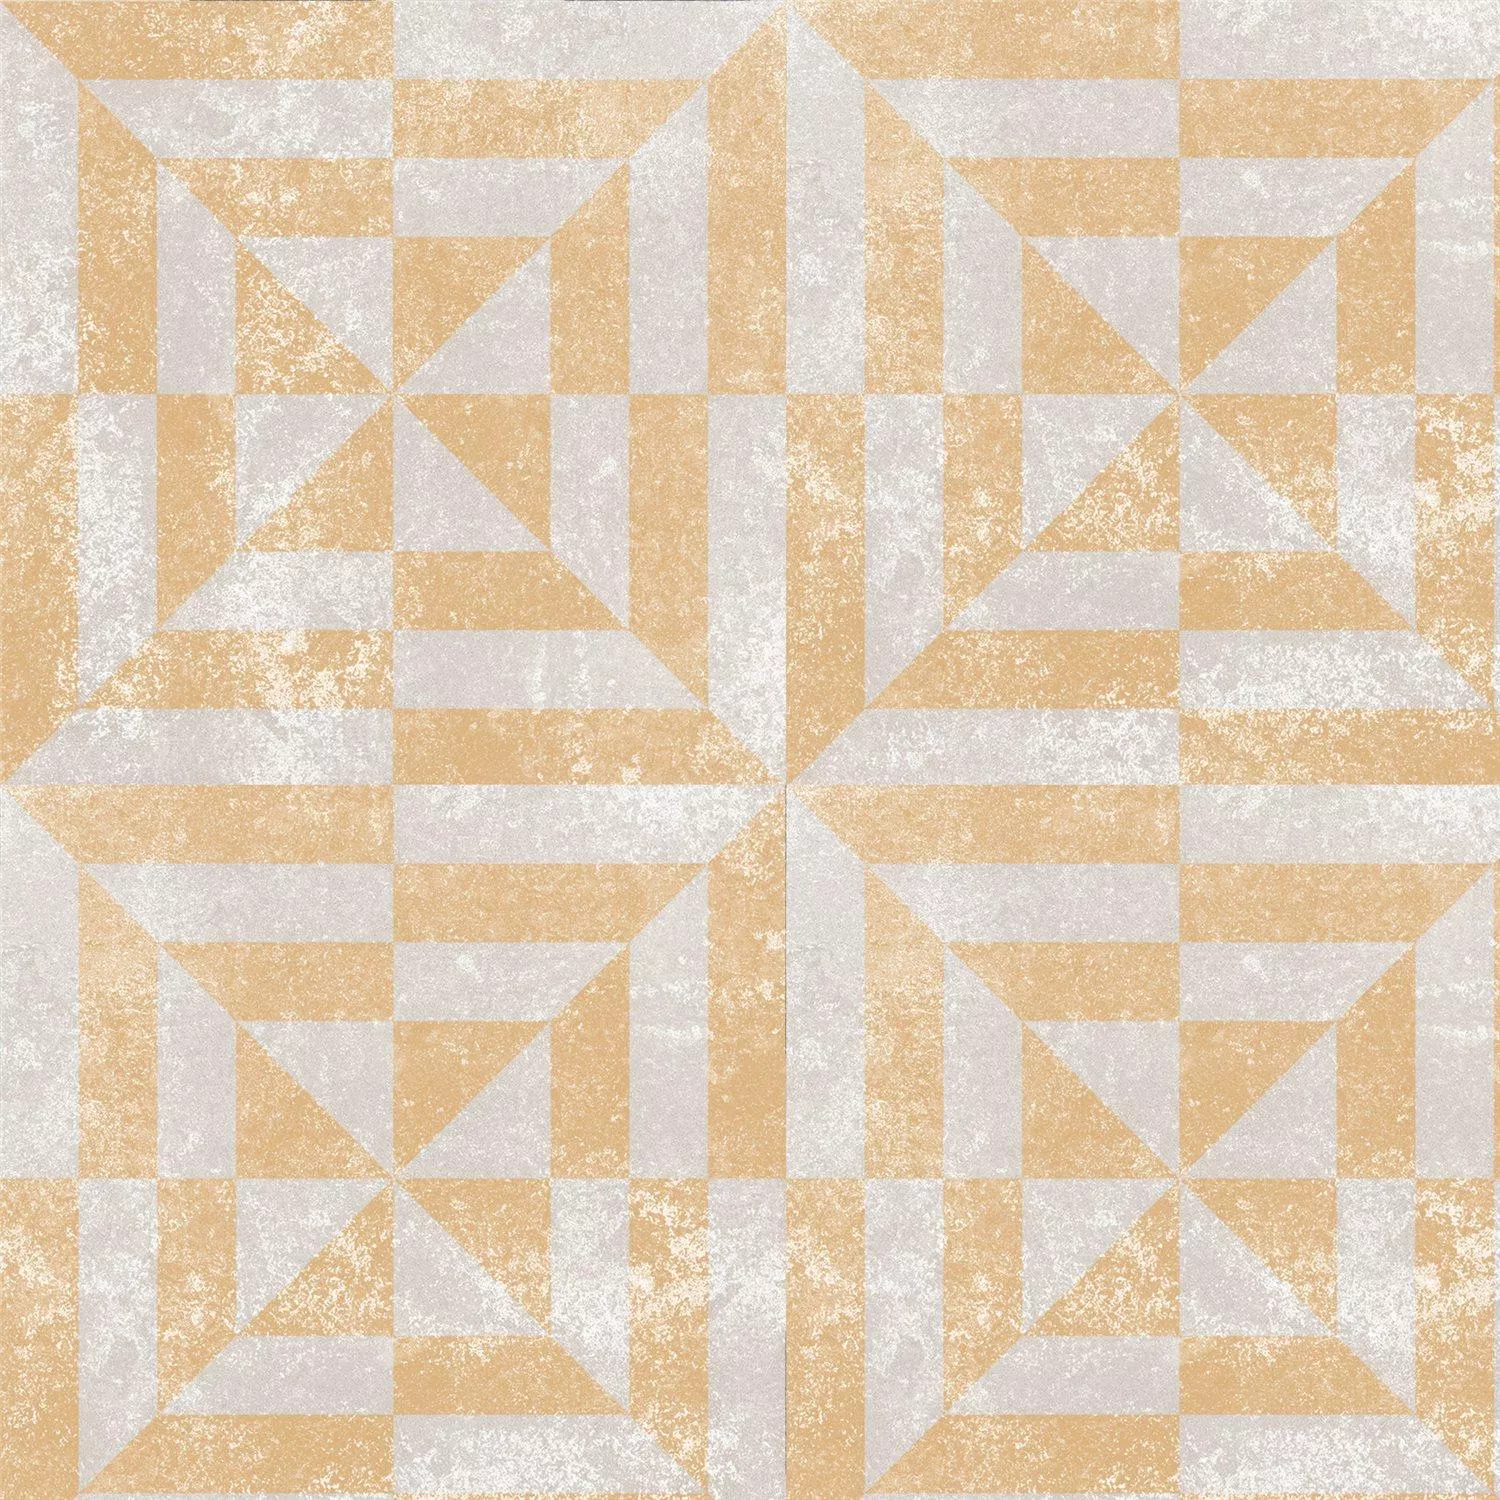 Sample Cement Tiles Retro Optic Gris Floor Tiles Mora 18,6x18,6cm